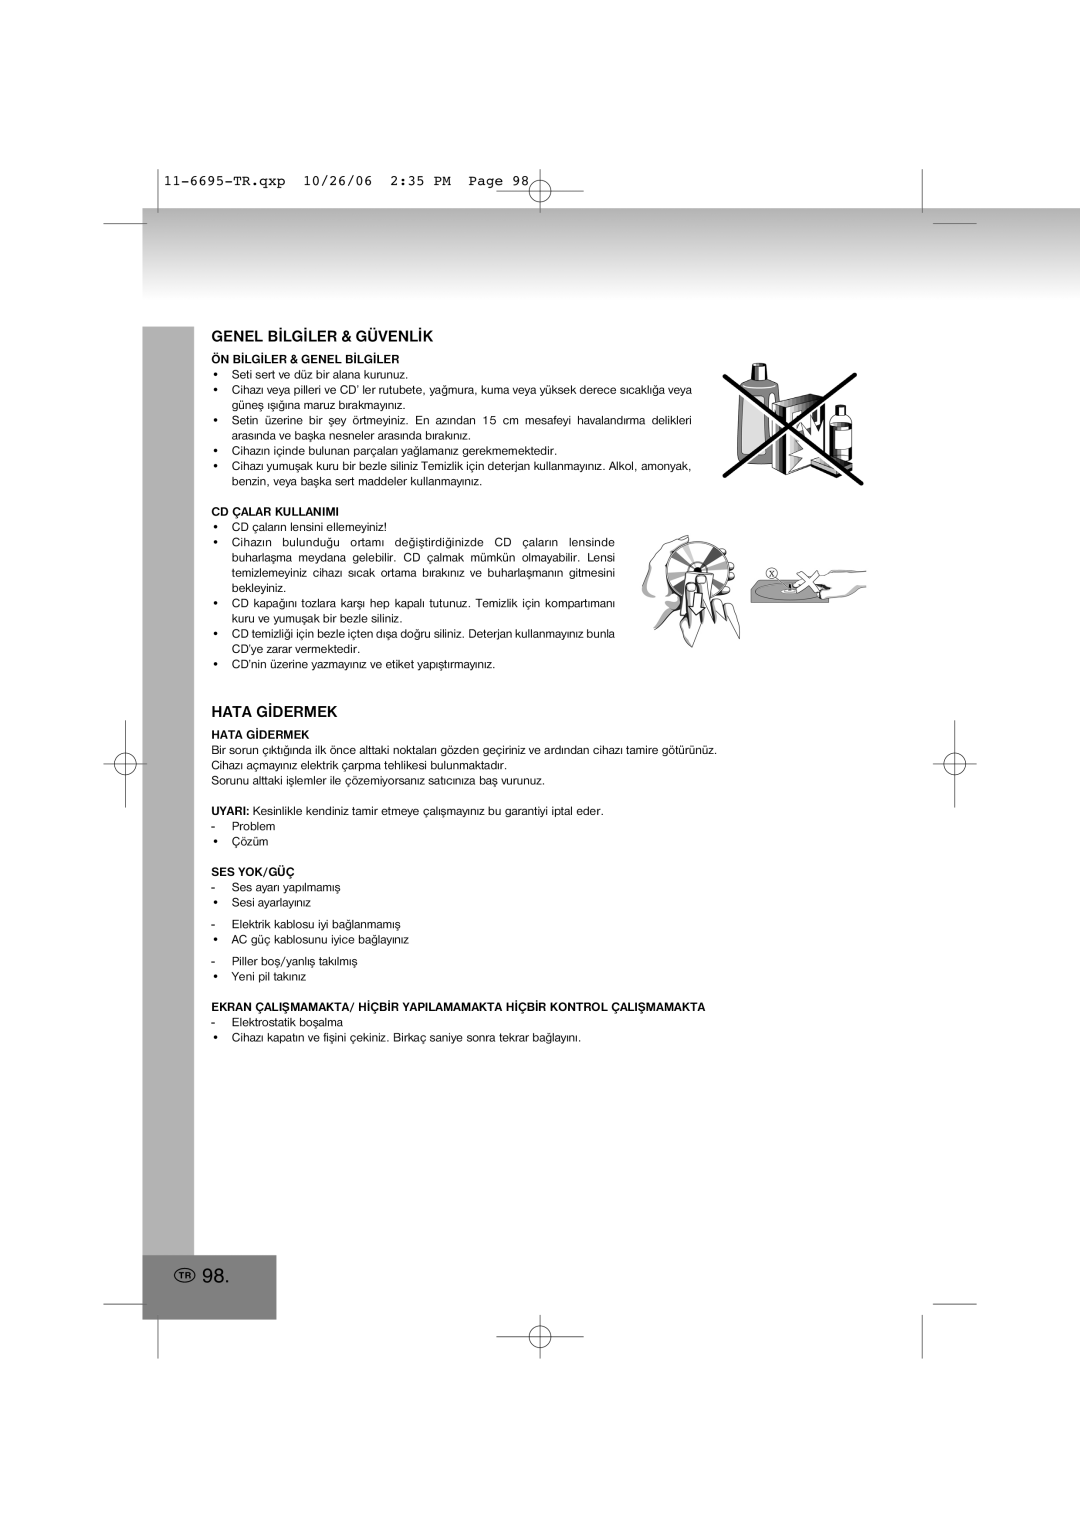 Elta manual Genel Býlgýler & Güvenlýk, Hata Gýdermek, 11-6695-TR.qxp10/26/06 2 35 PM Page 